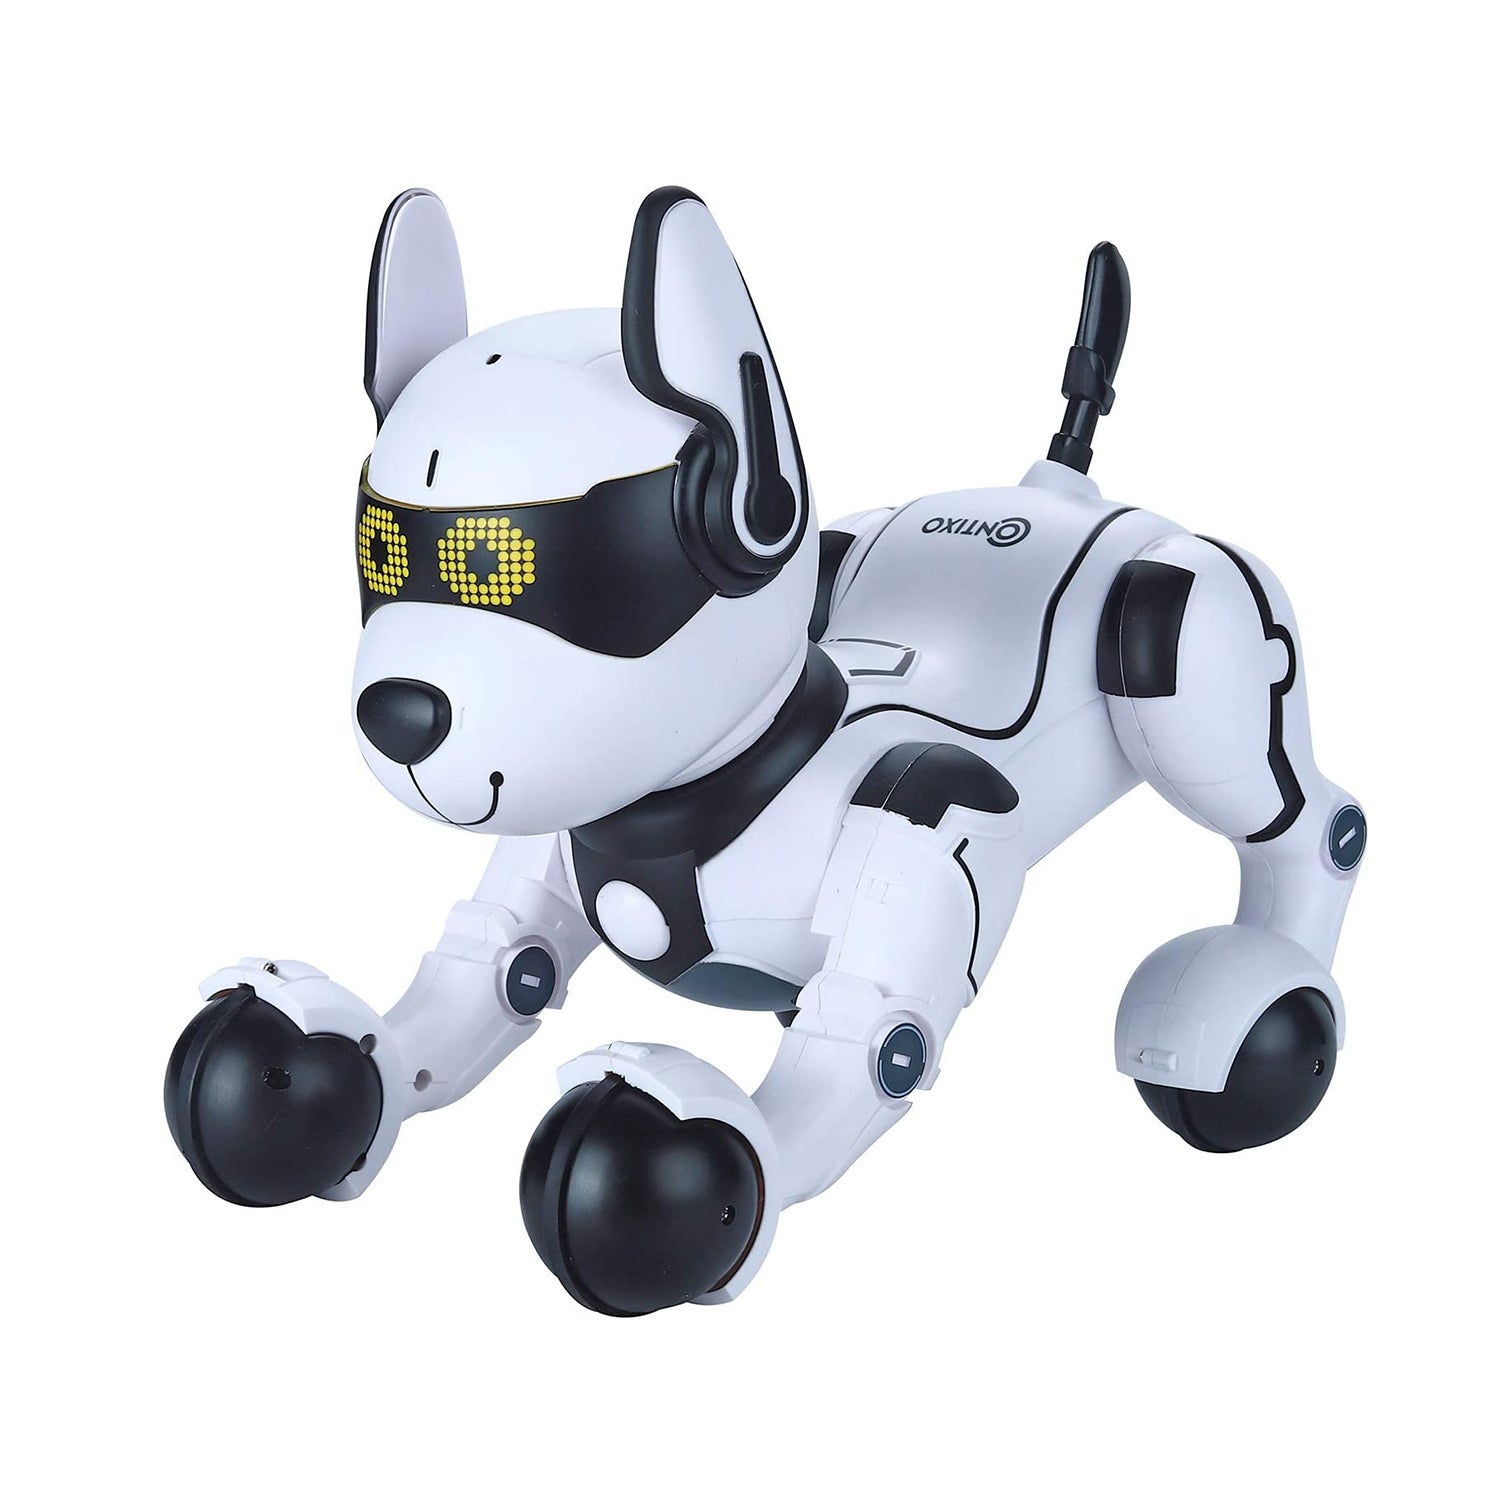 Contixo R3 Robot Dog, Walking Pet Robot Toy Robots for Kids